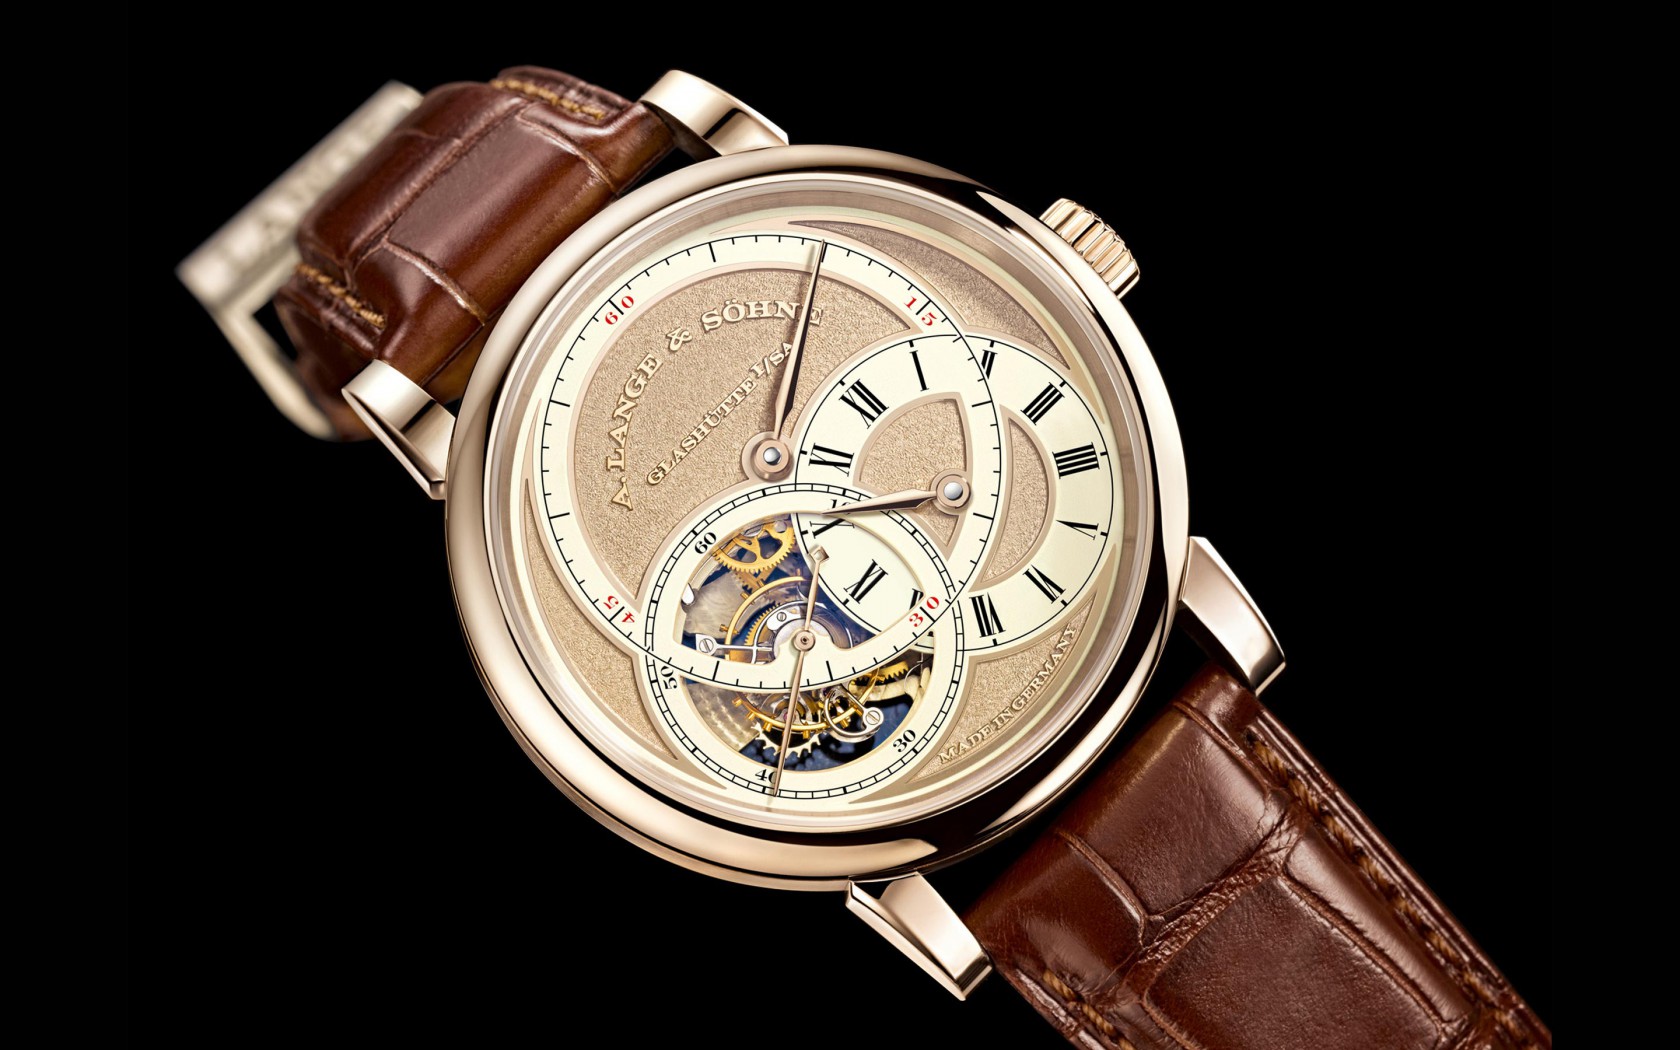 a-lange-sohne-richard-lange-tourbillion-richard-lange-pour-le-merite-handwerkskunst-761-050-replica-watches-with-brown-strapl